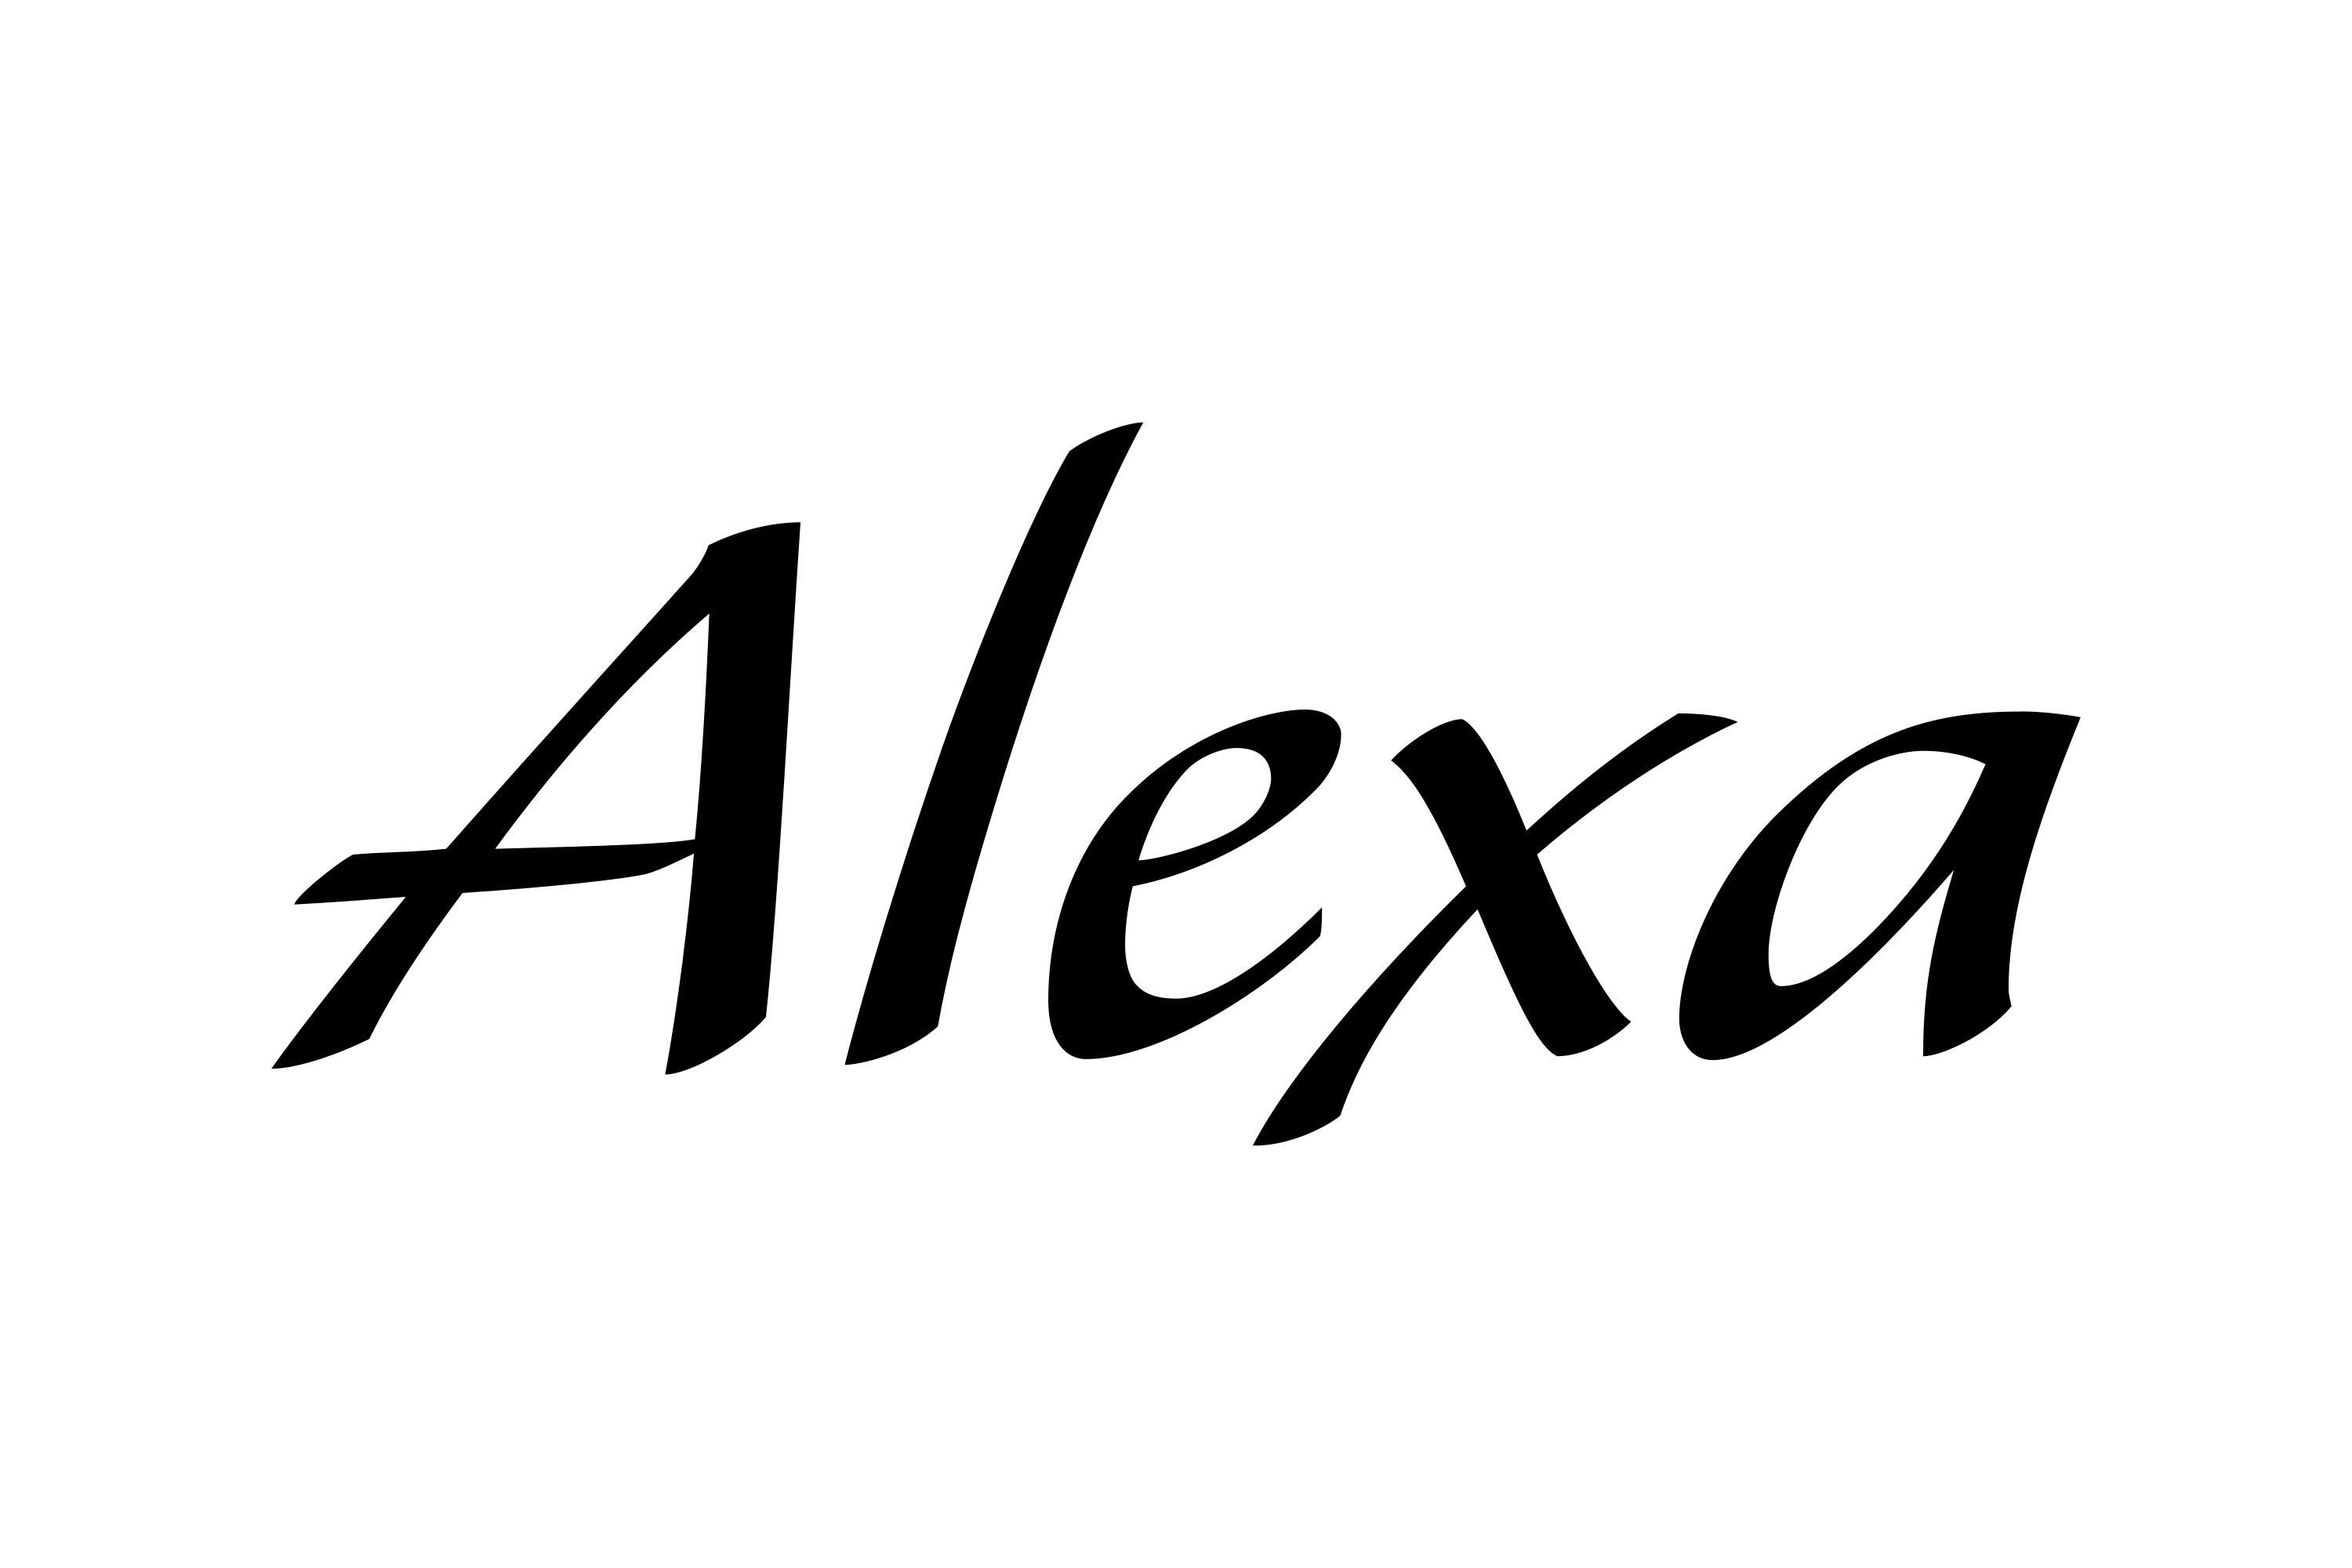 Download Alexa Logo in SVG Vector or PNG File Format 